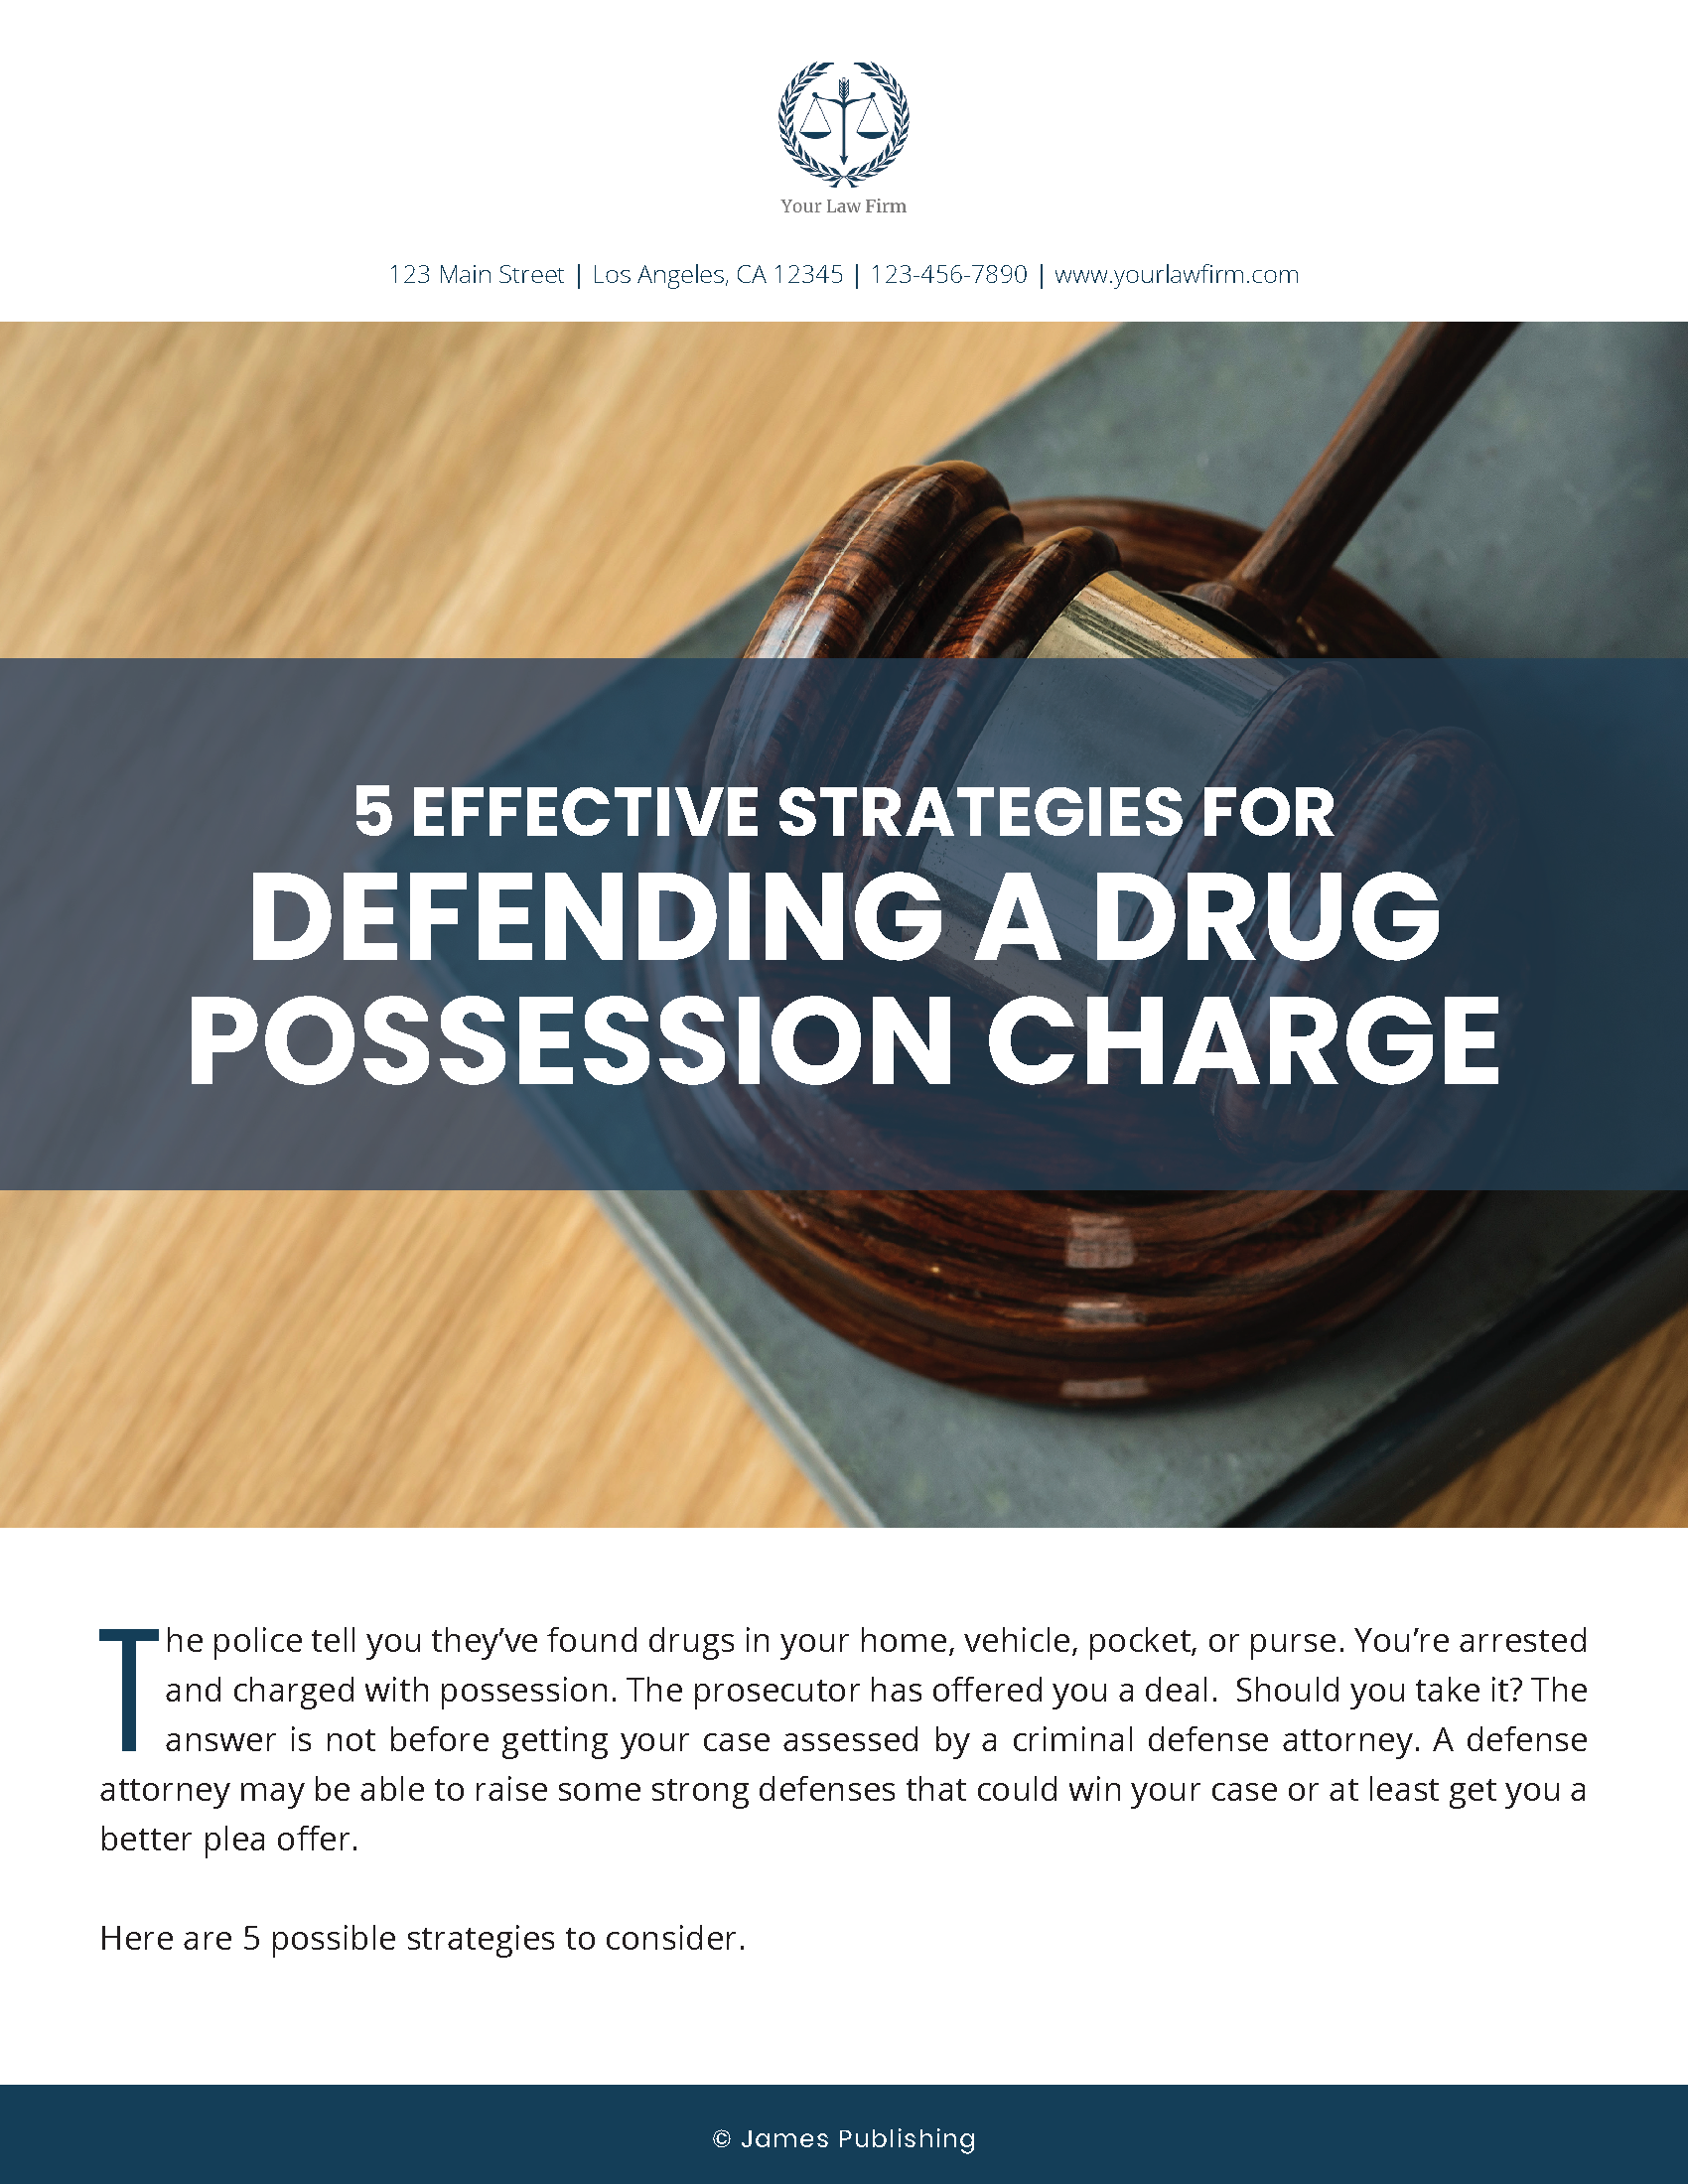 CRIM-32 5 Effective Strategies for Defending a Drug Possession Charge